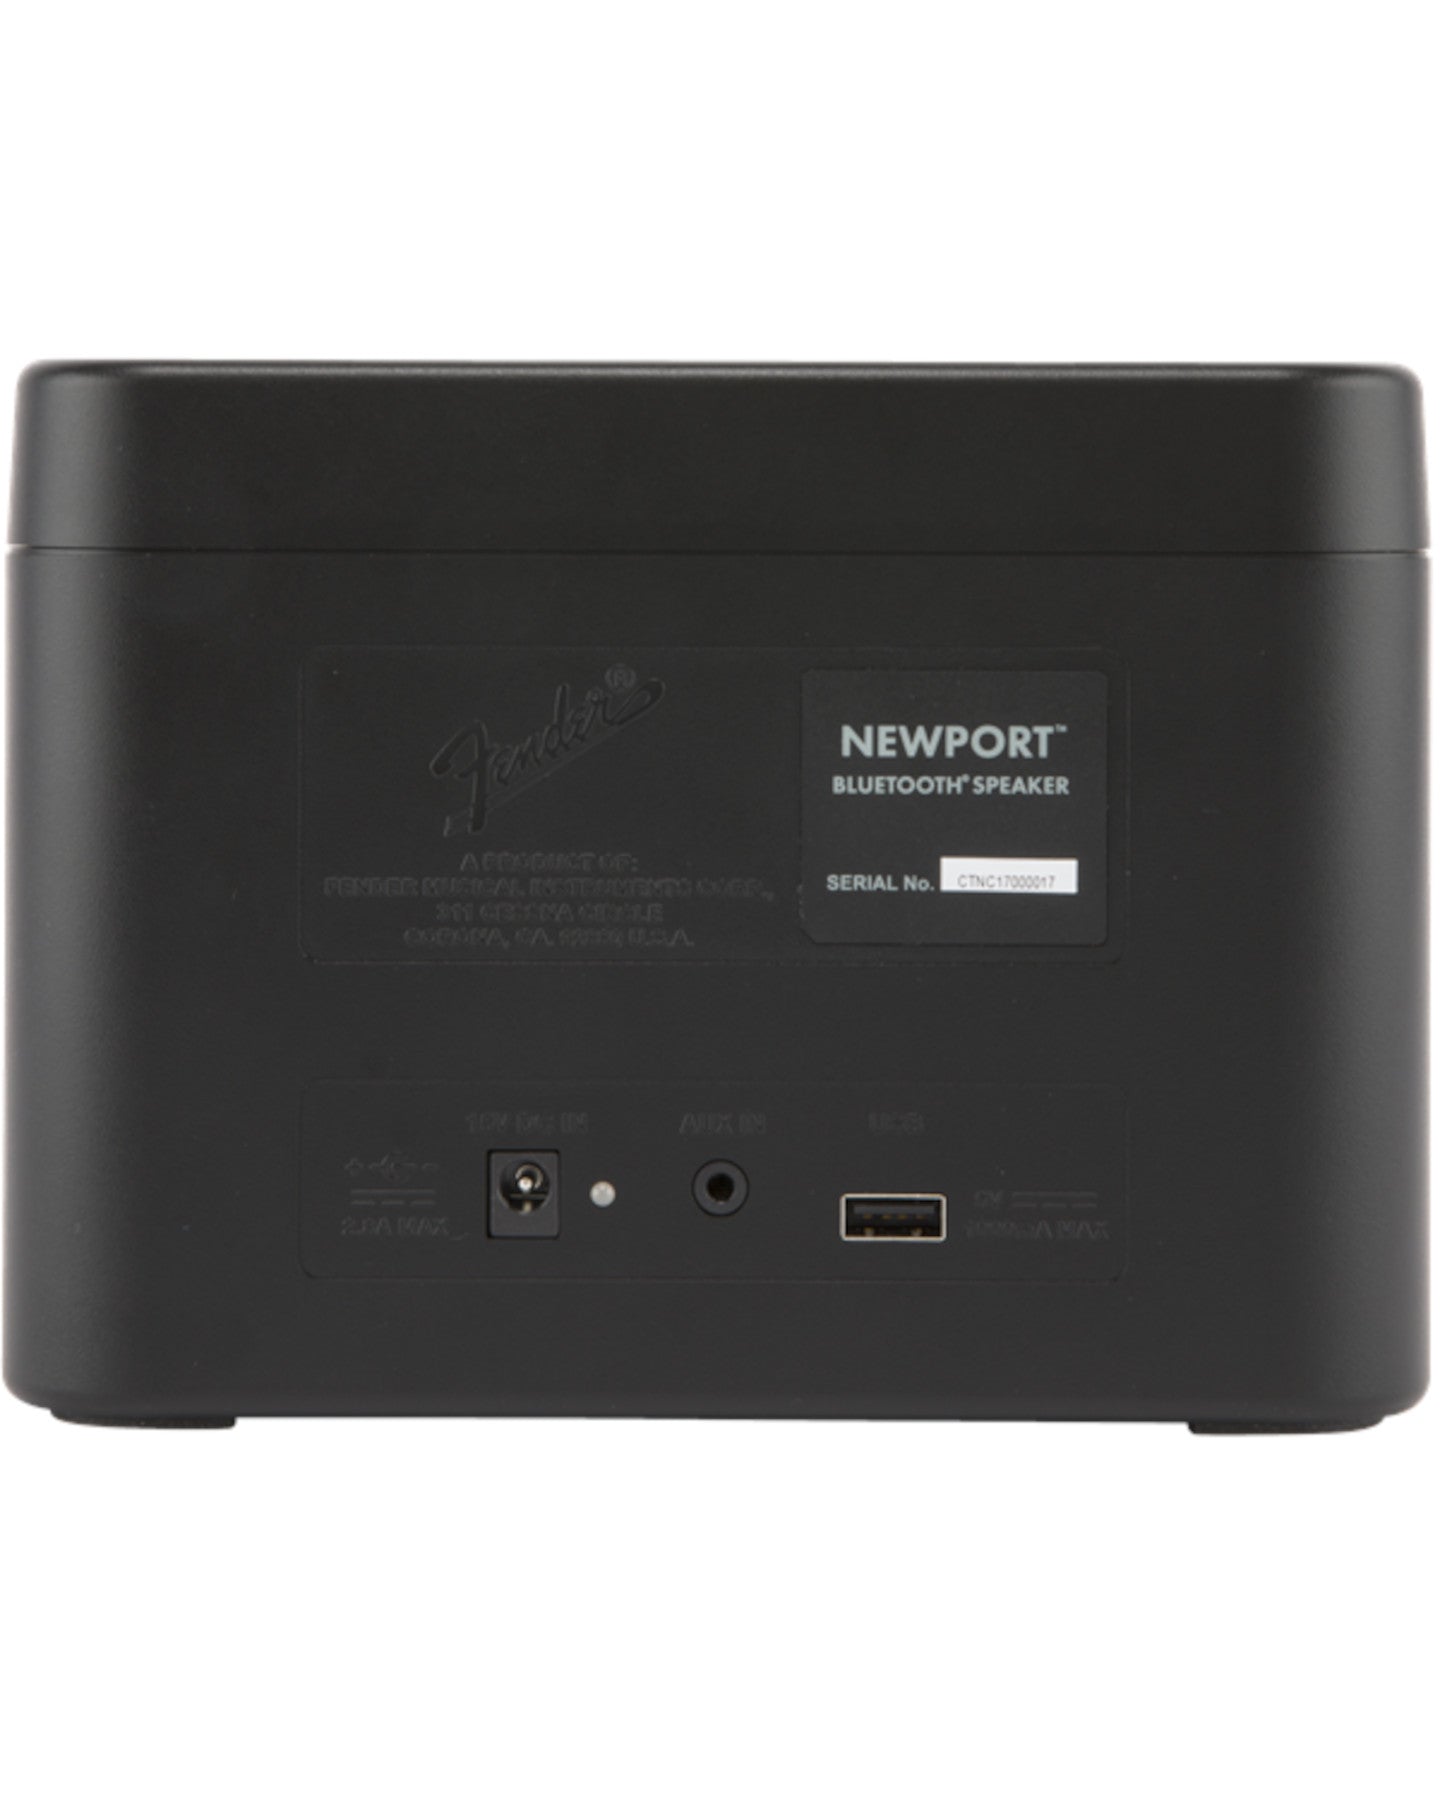 Newport Bluetooth Speaker, Black